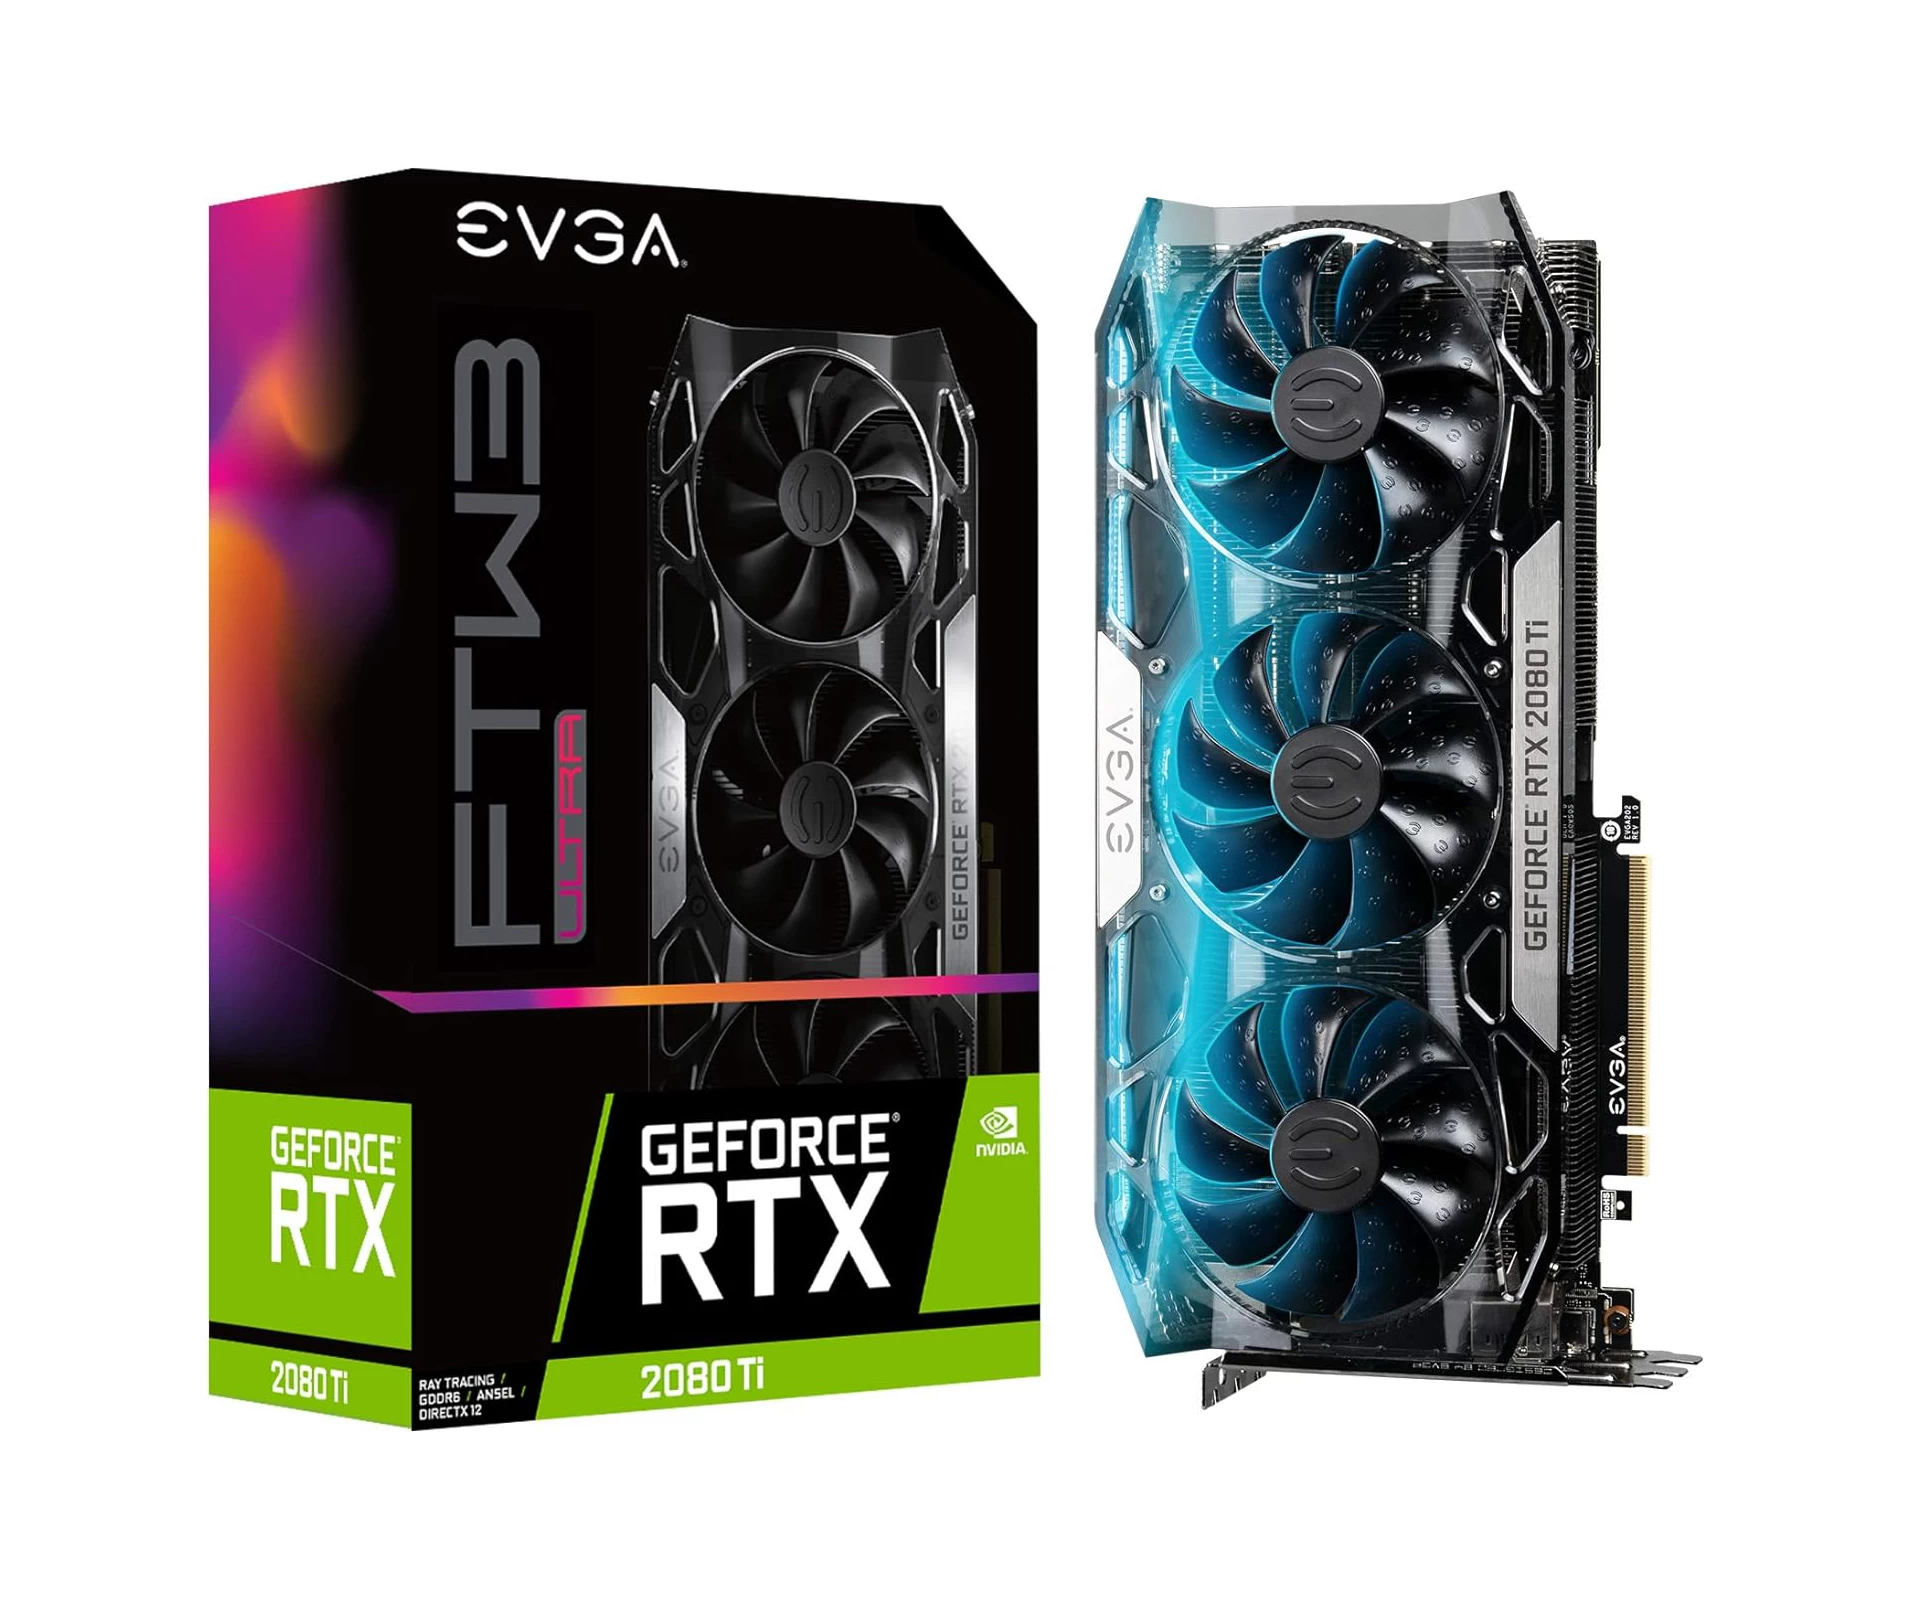 EVGA GeForce RTX 2080 Ti FTW3 ULTRA Package